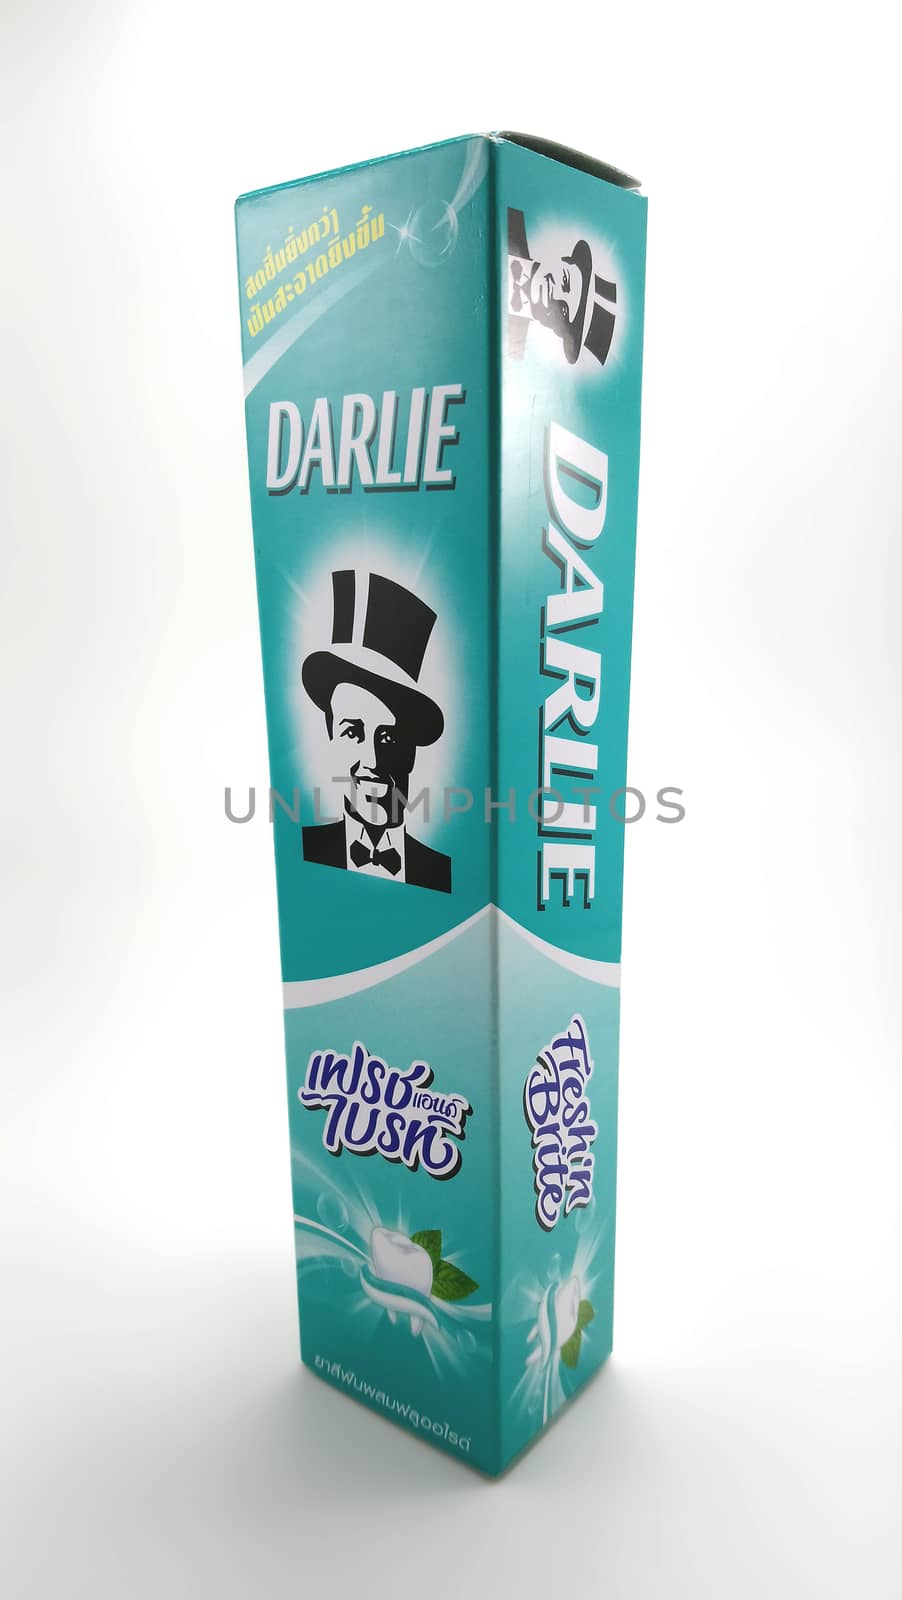 Darlie fresh n brite toothpaste in Manila, Philippines by imwaltersy